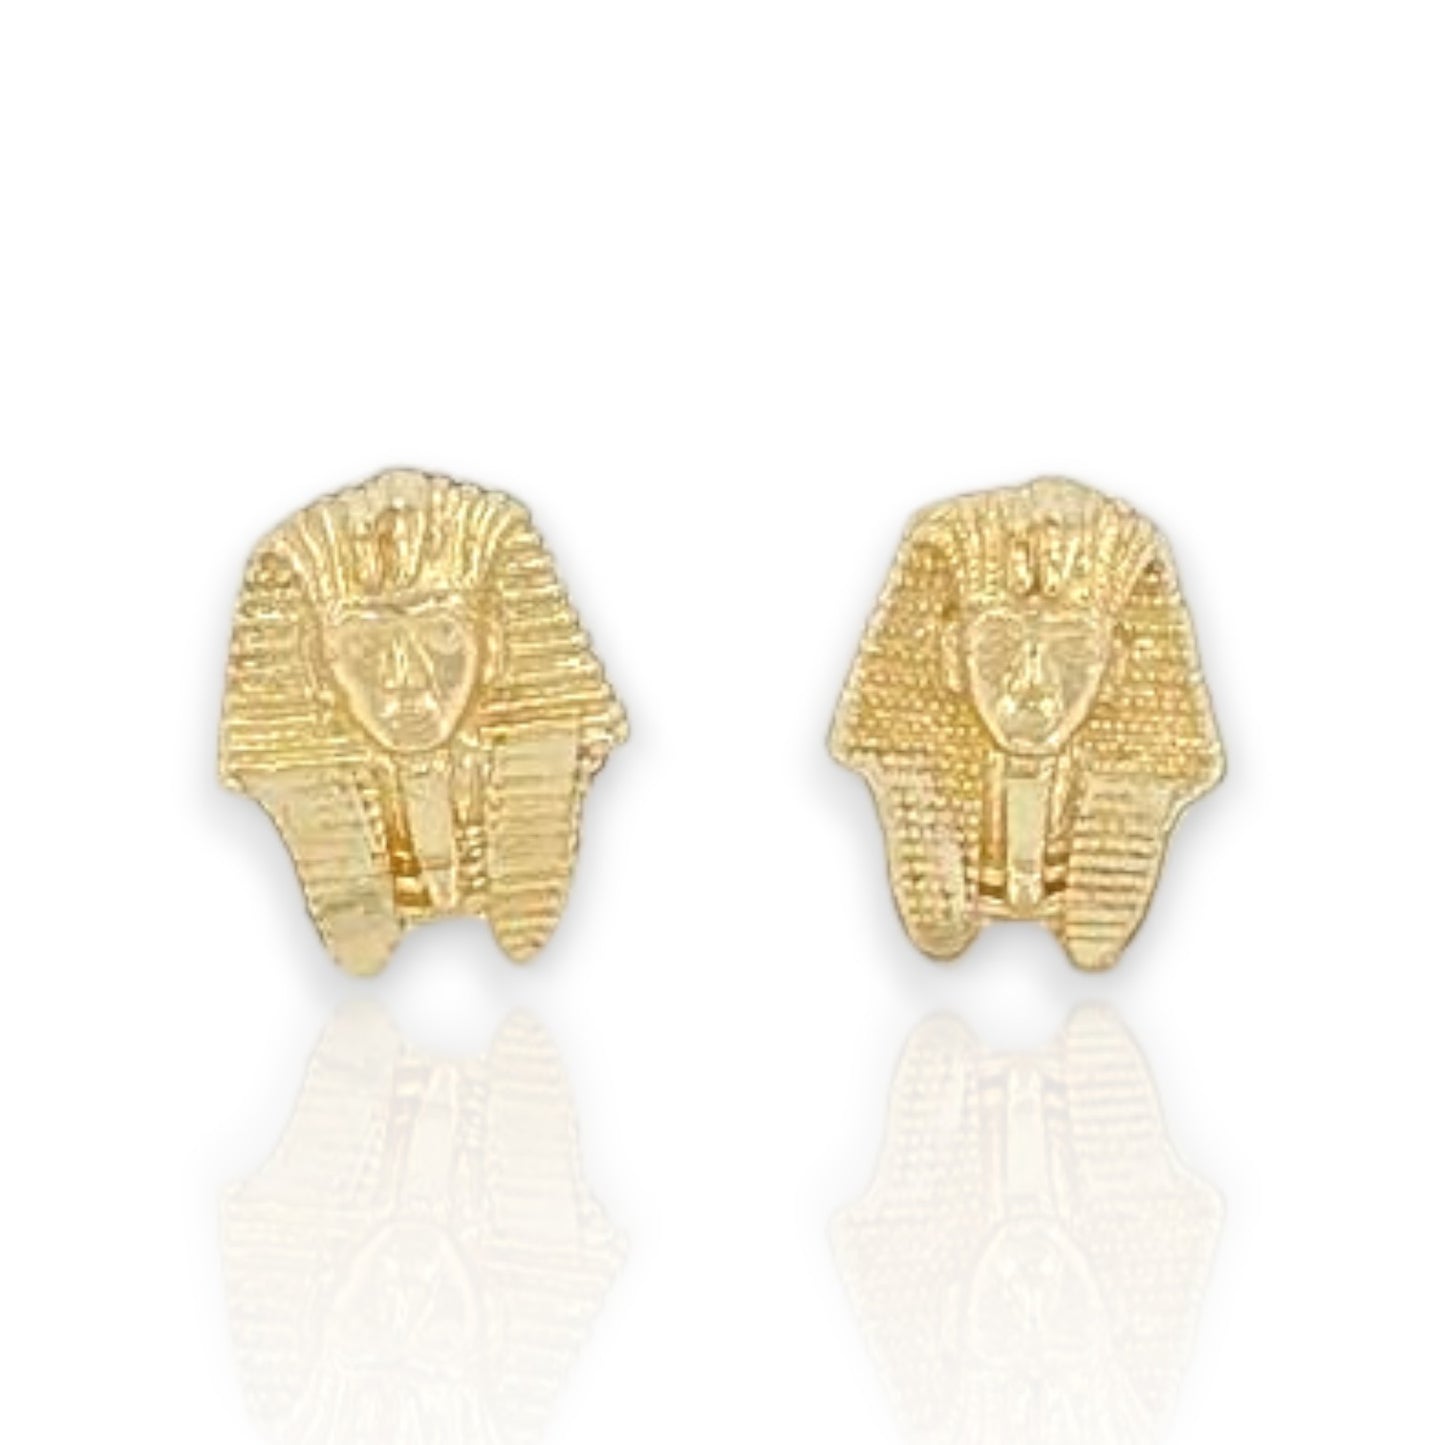 Pharaoh Earrings  - 10k Yellow Gold